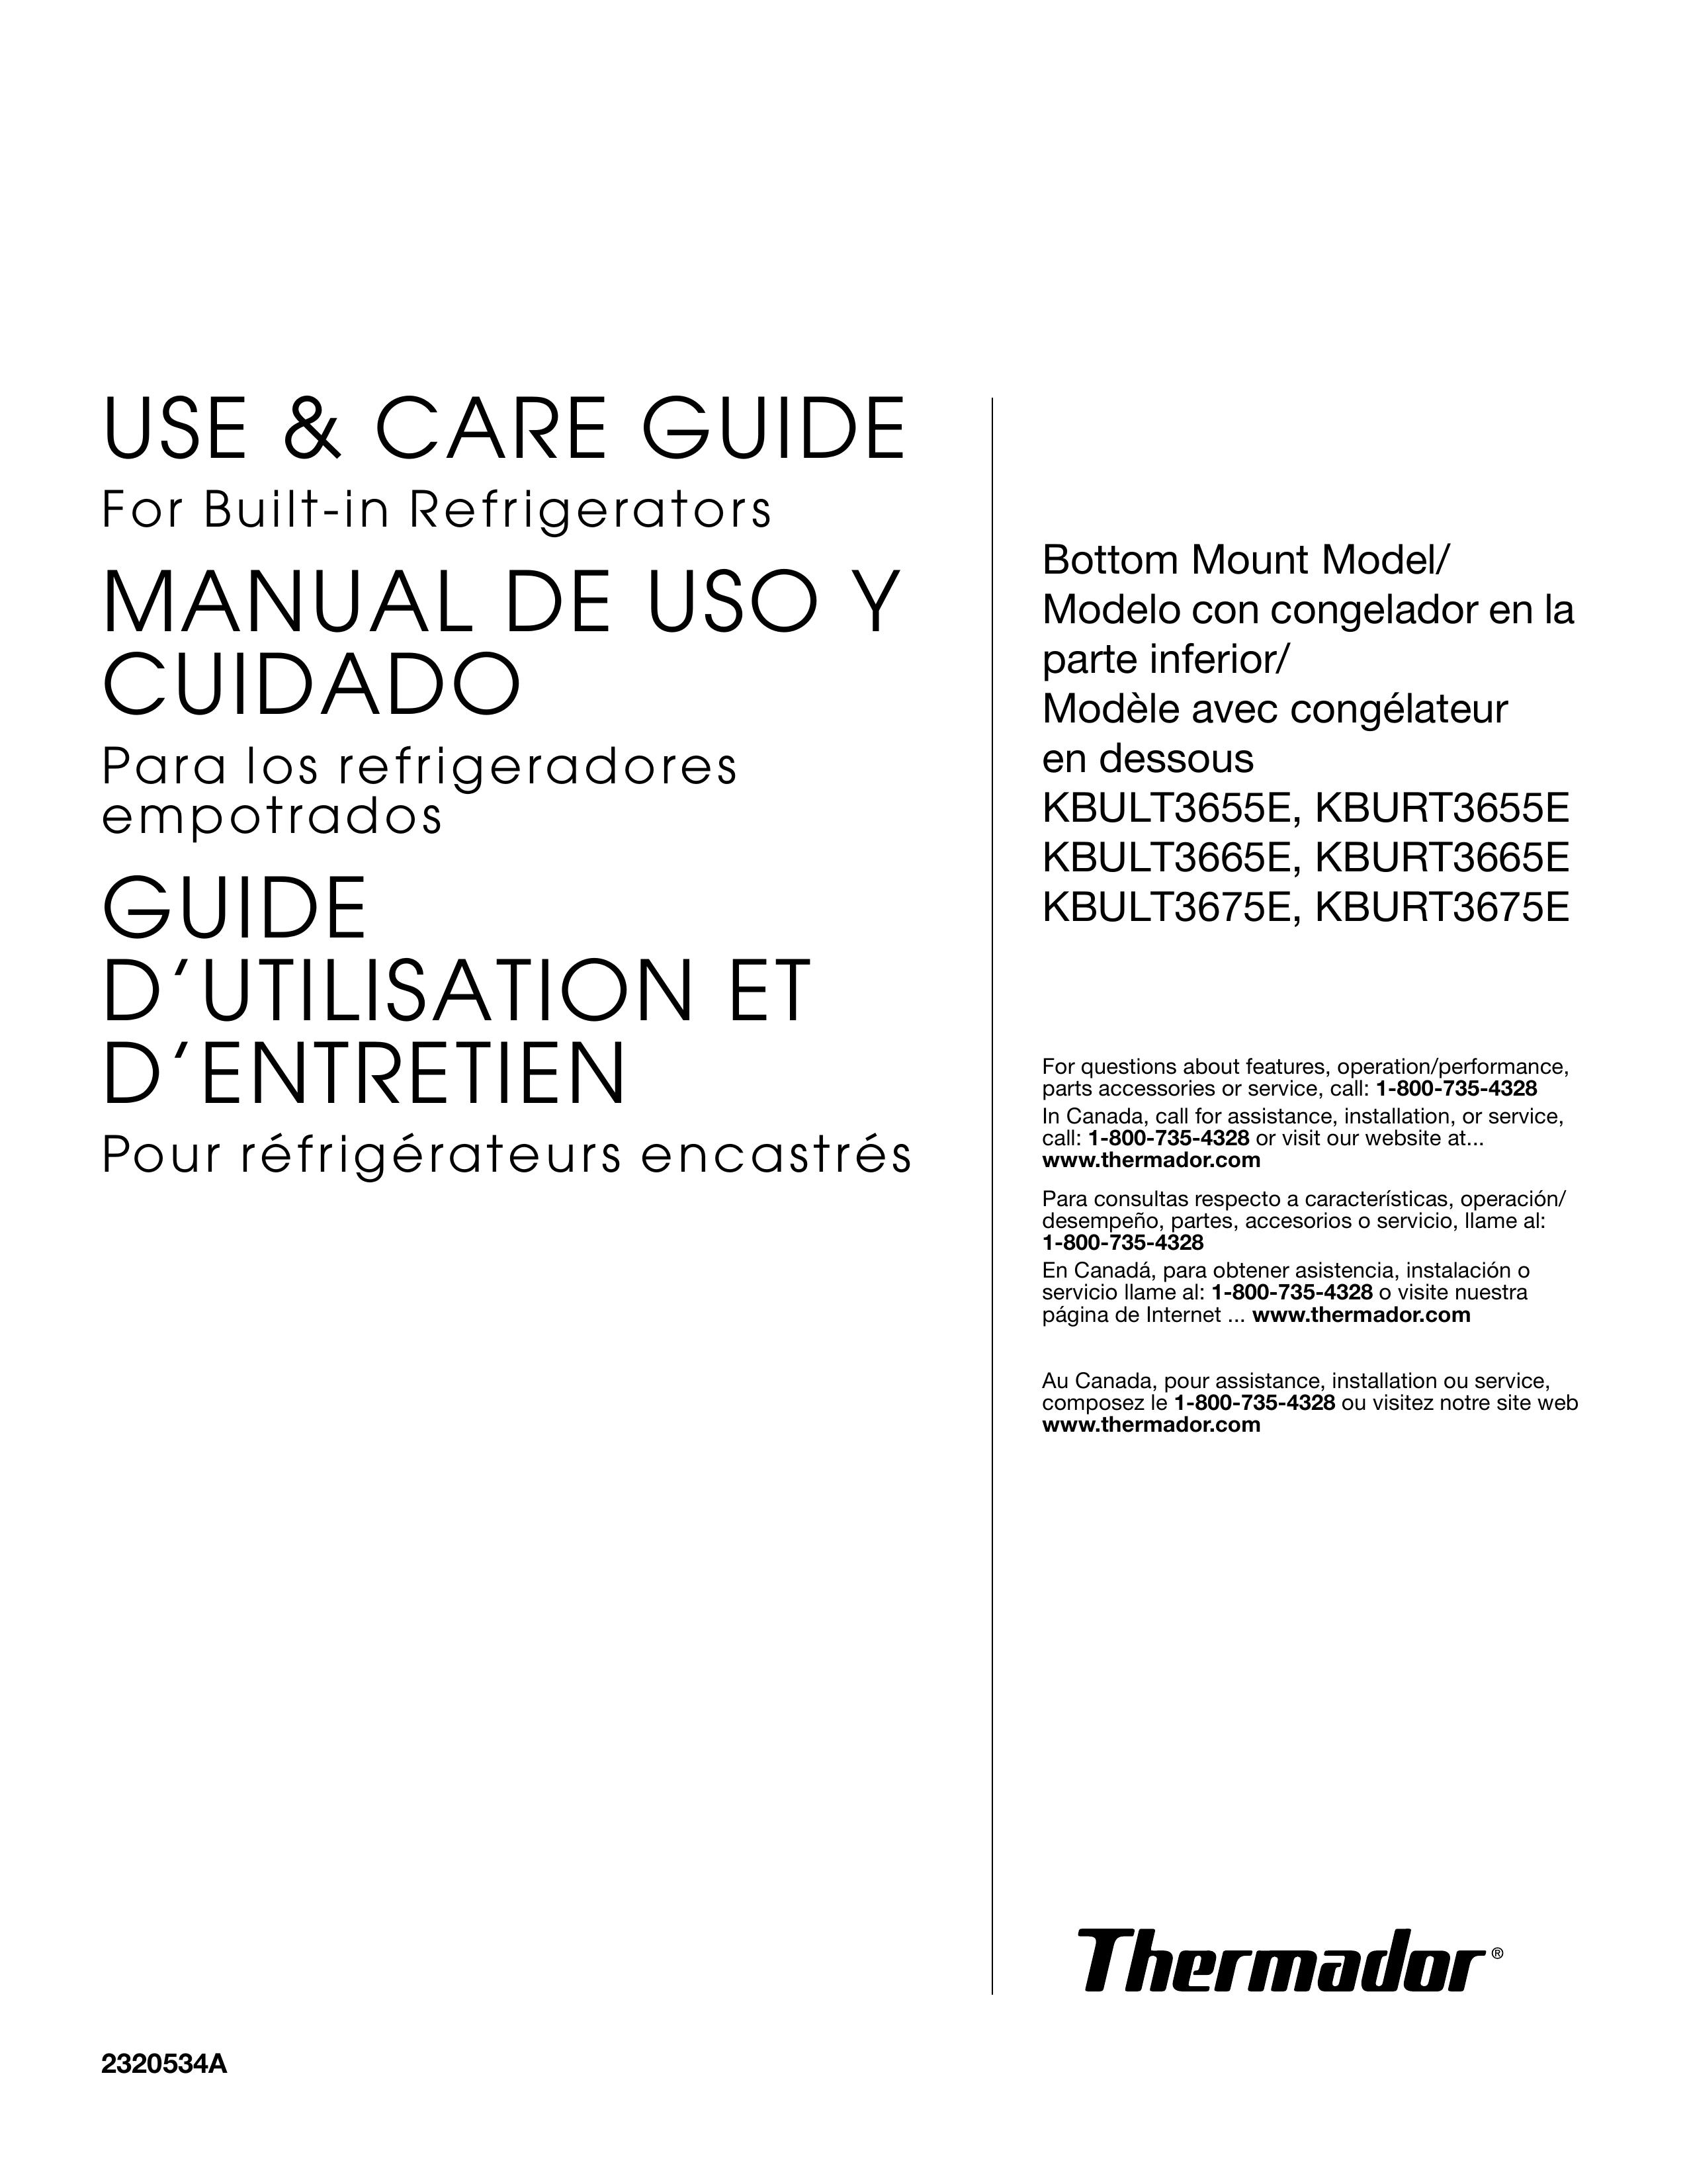 Thermador KBULT3675E Refrigerator User Manual